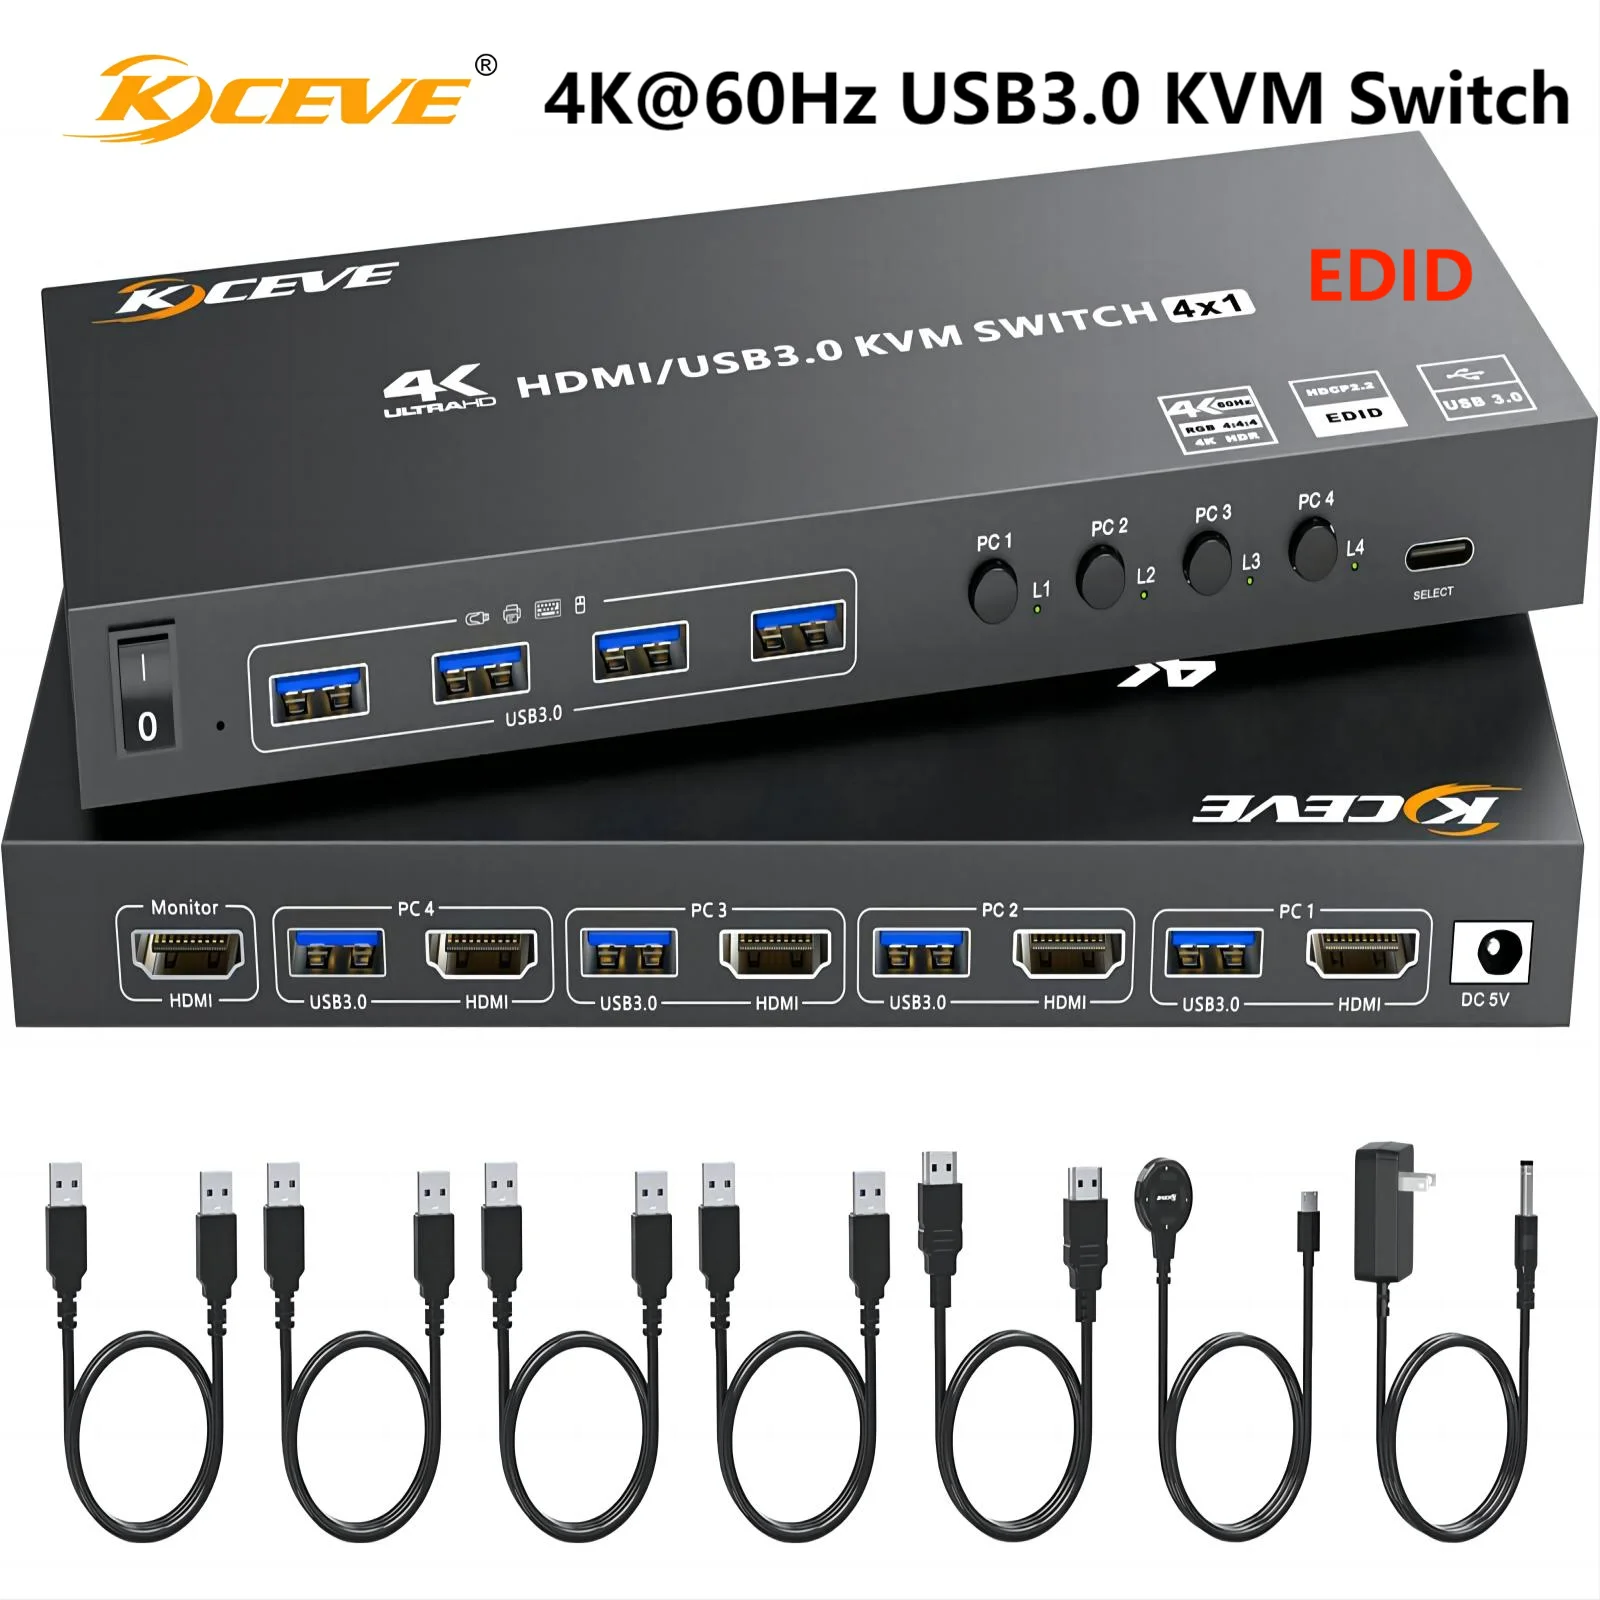 

HDMI KVM переключатель 4 компьютера 4K @ 60 Гц имитация EDID,4 порта USB3.0 KVM переключатели для 4 ПК Share 1 монитор клавиатуры мыши принтера